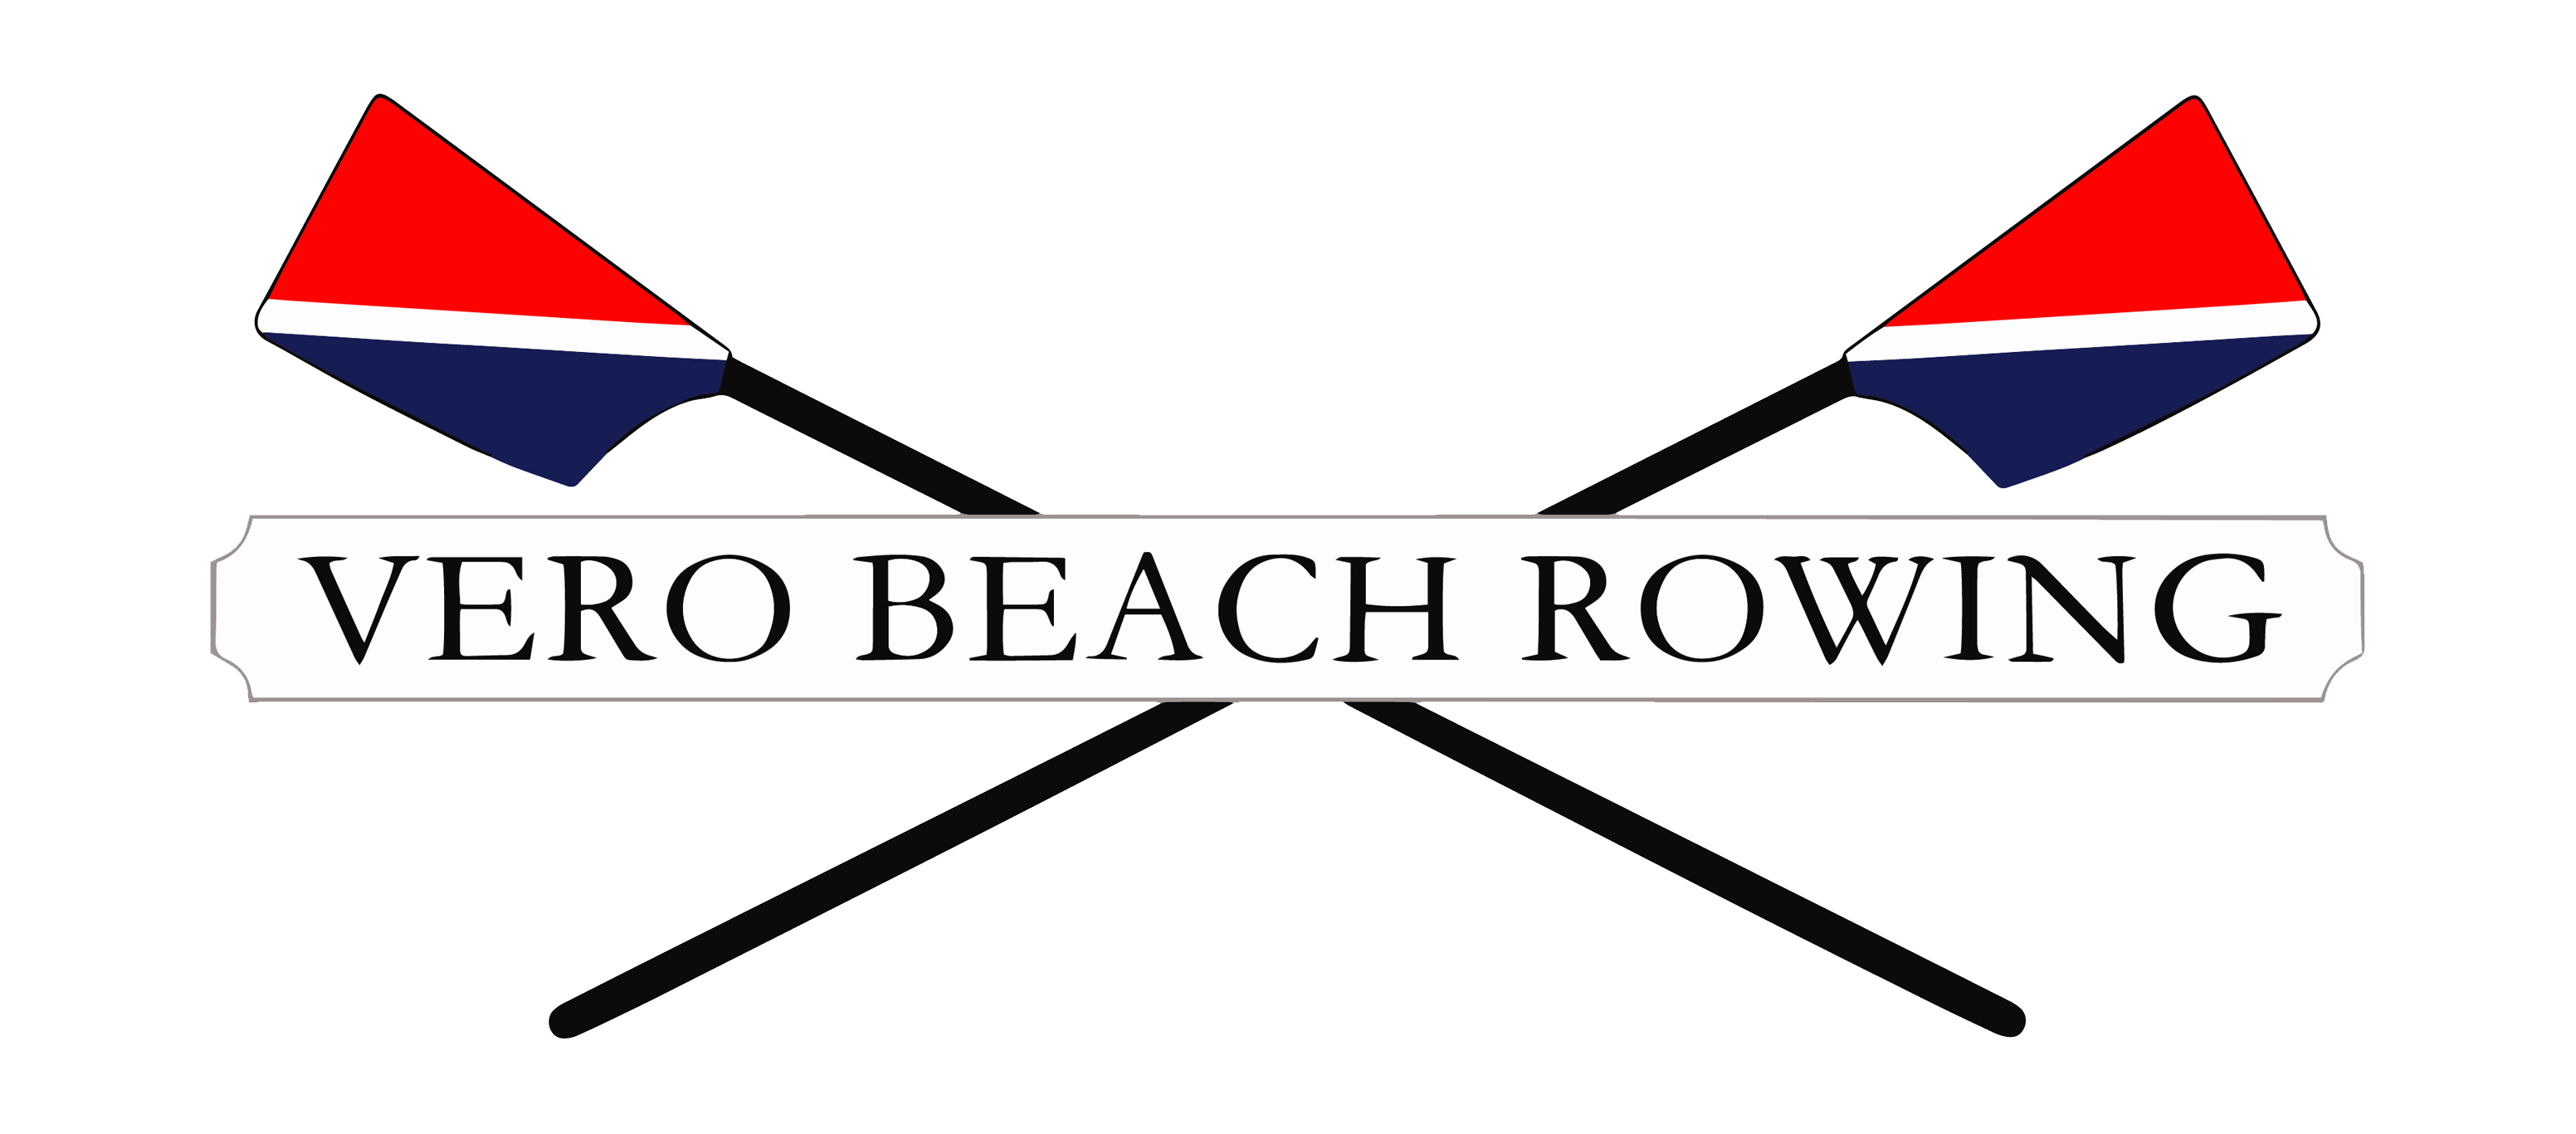 Rowing Logo - Vero Beach Rowing Logo